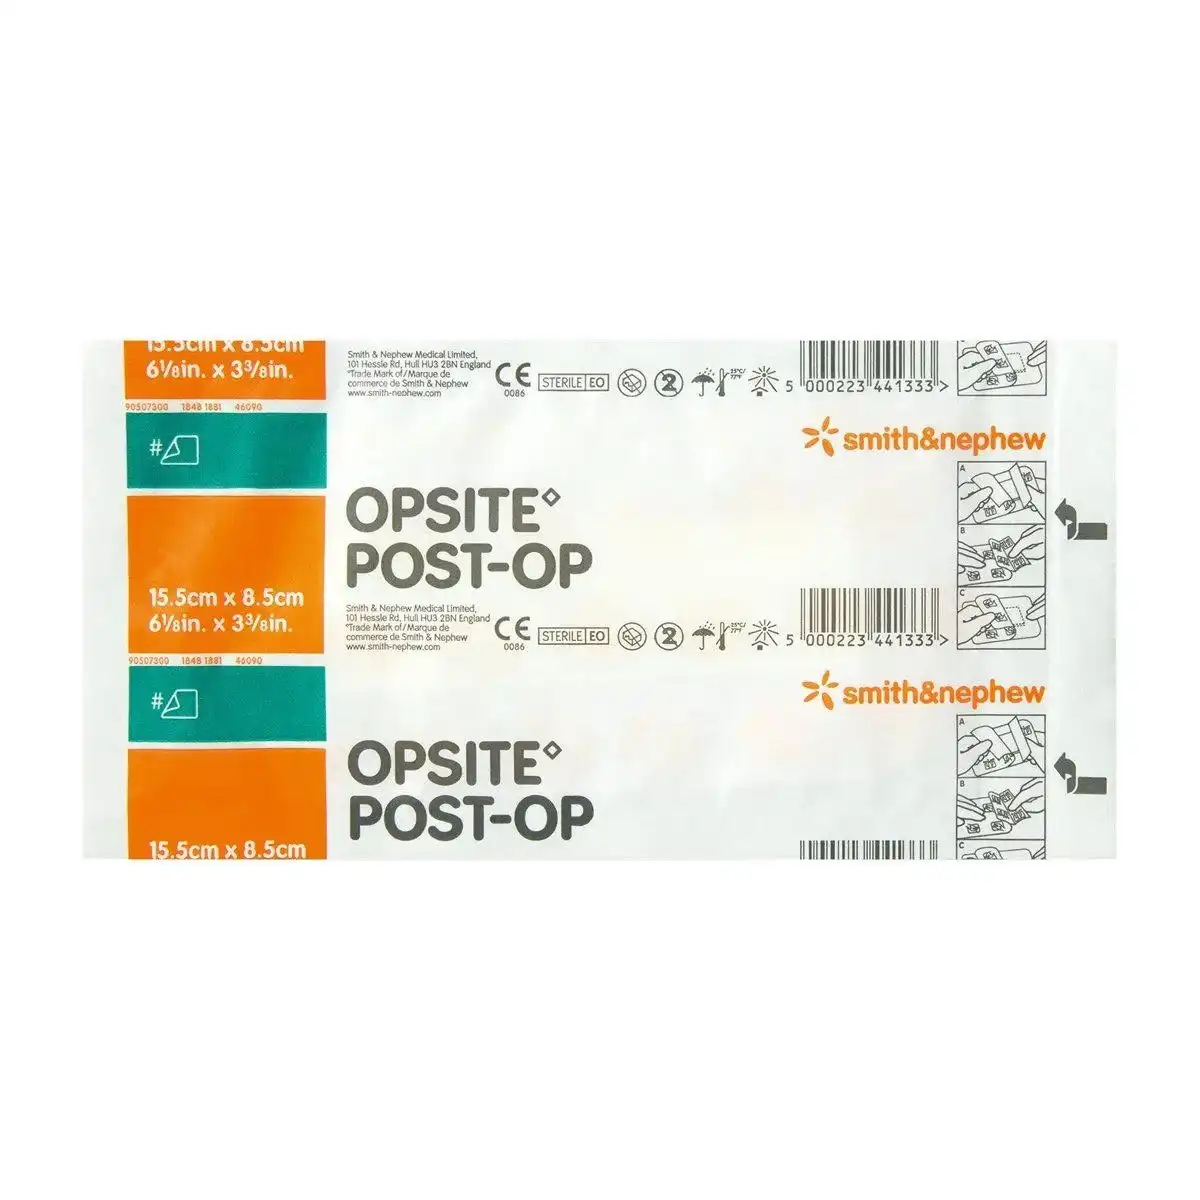 OPSITE Post Op 15.5cm x 8.5cm Dressing